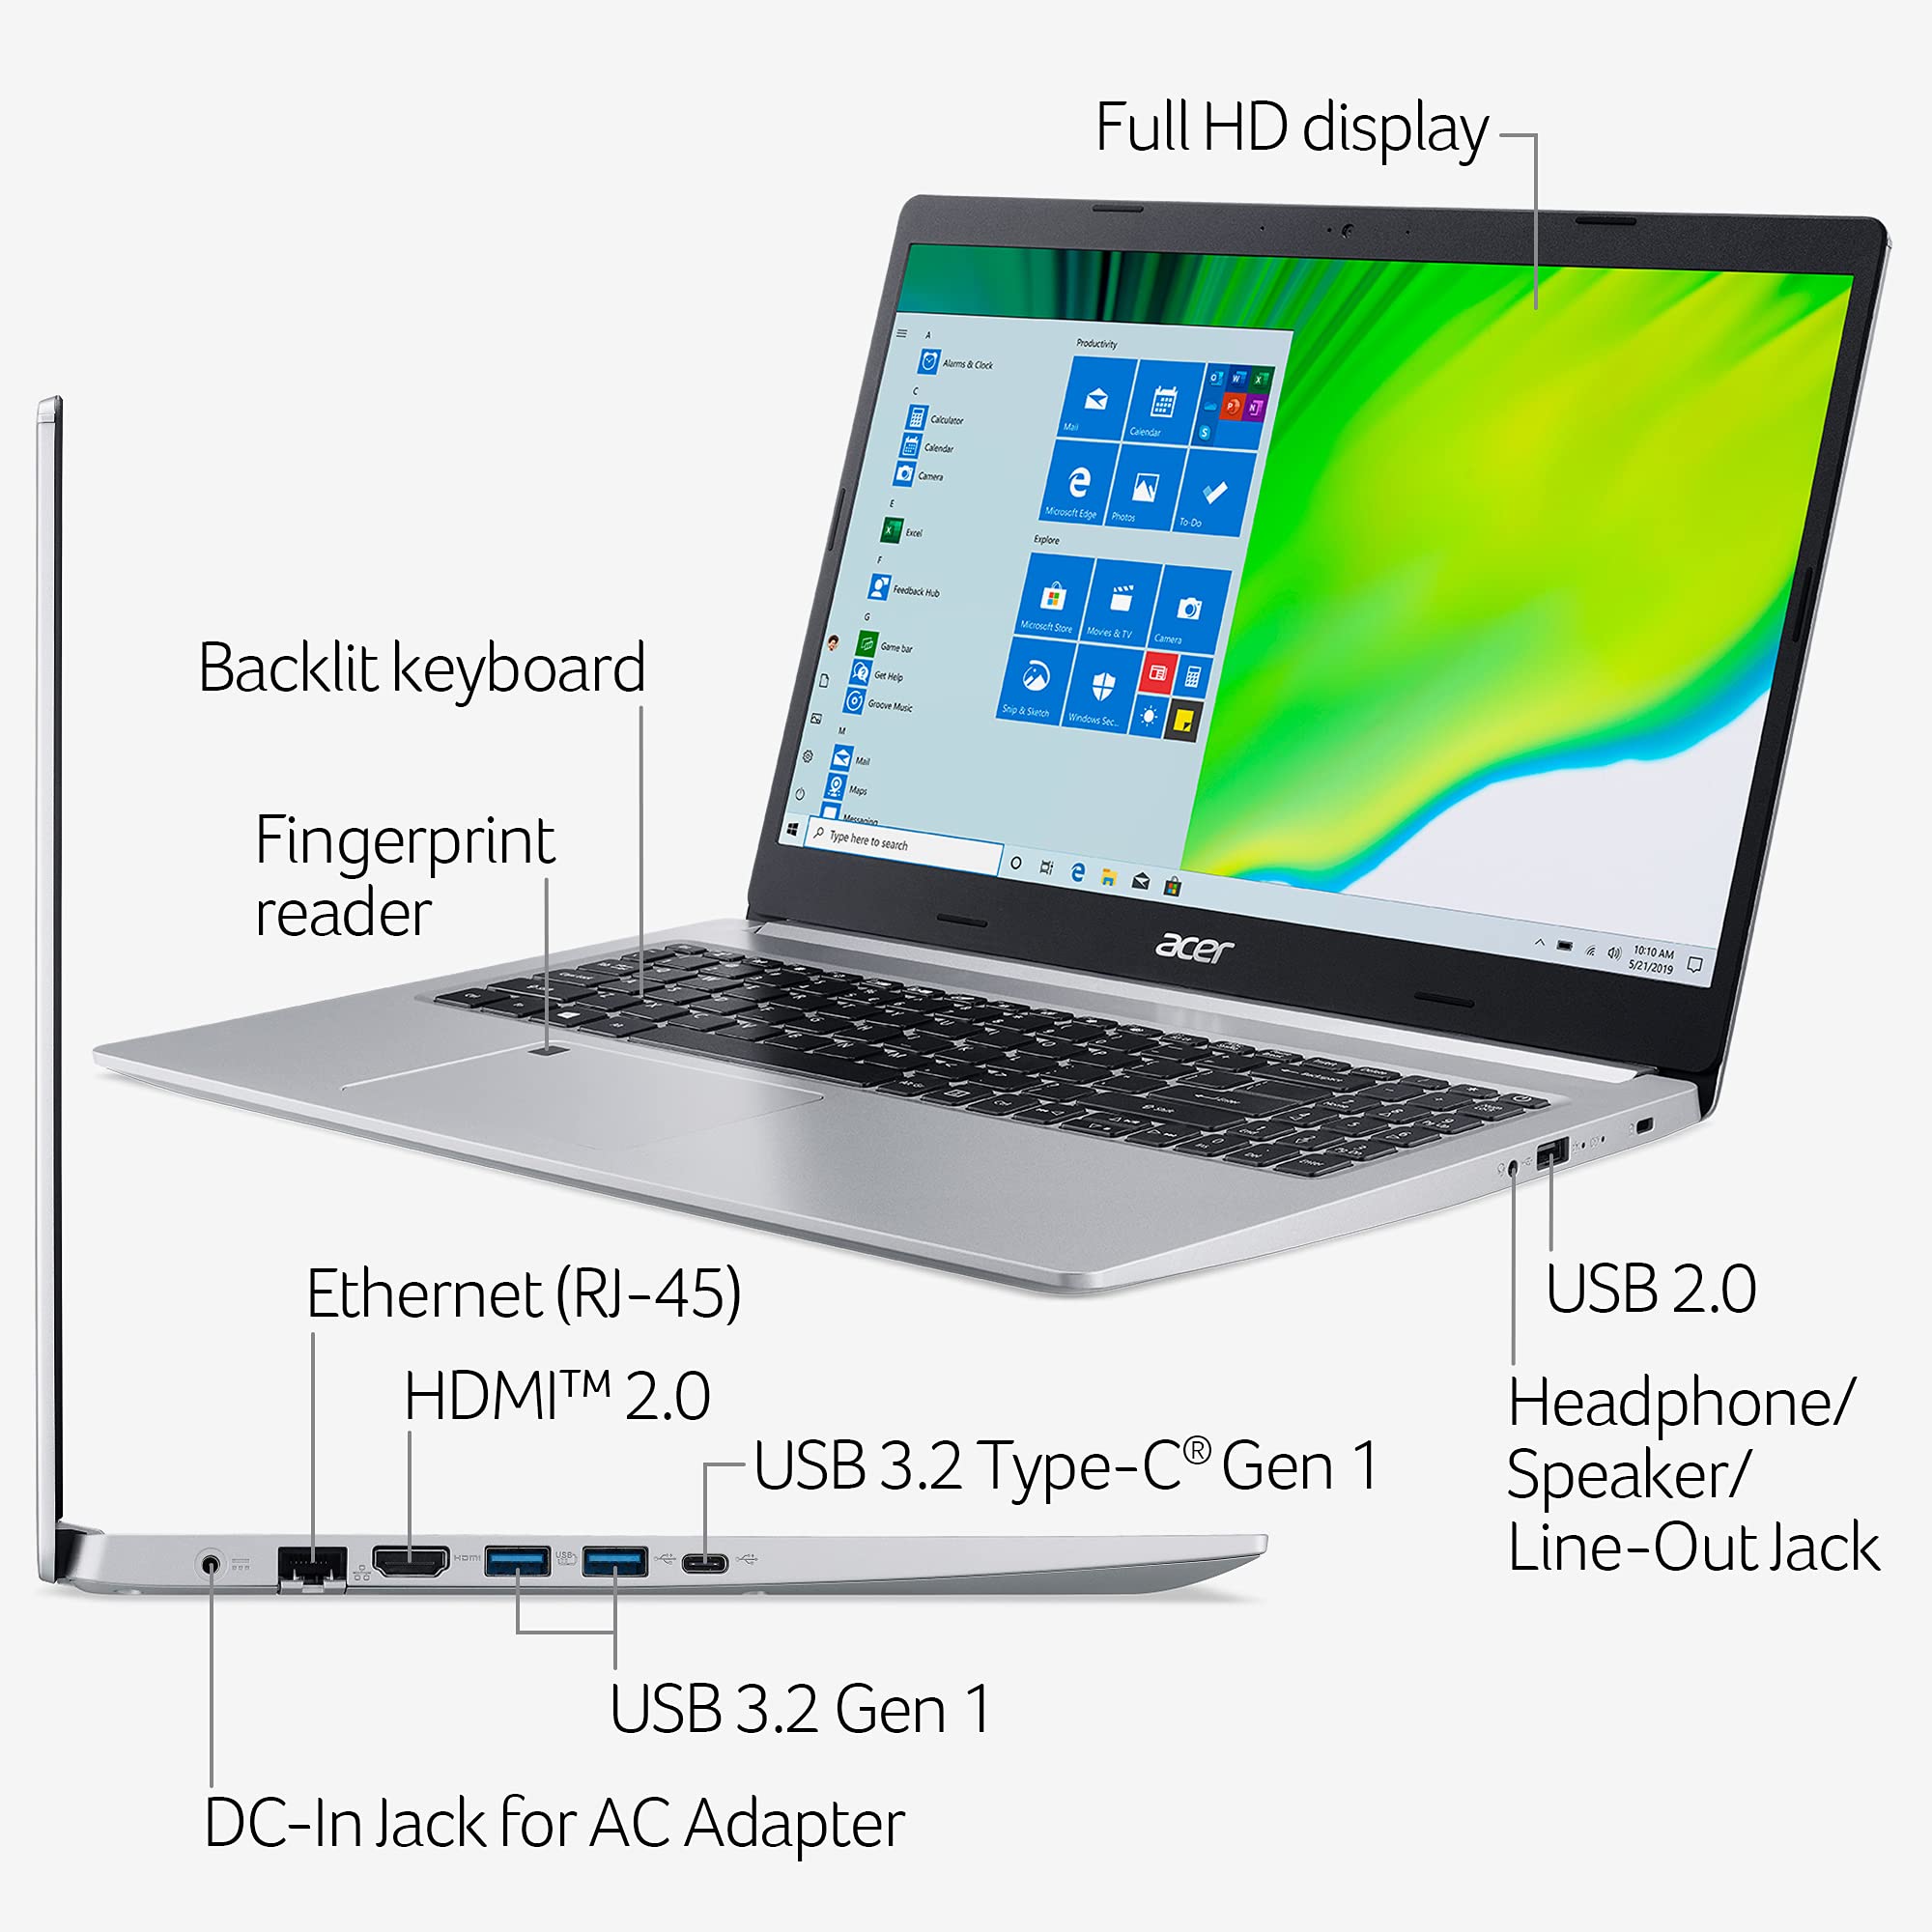 Acer Aspire 5 A515-46-R14K Slim Laptop | 15.6